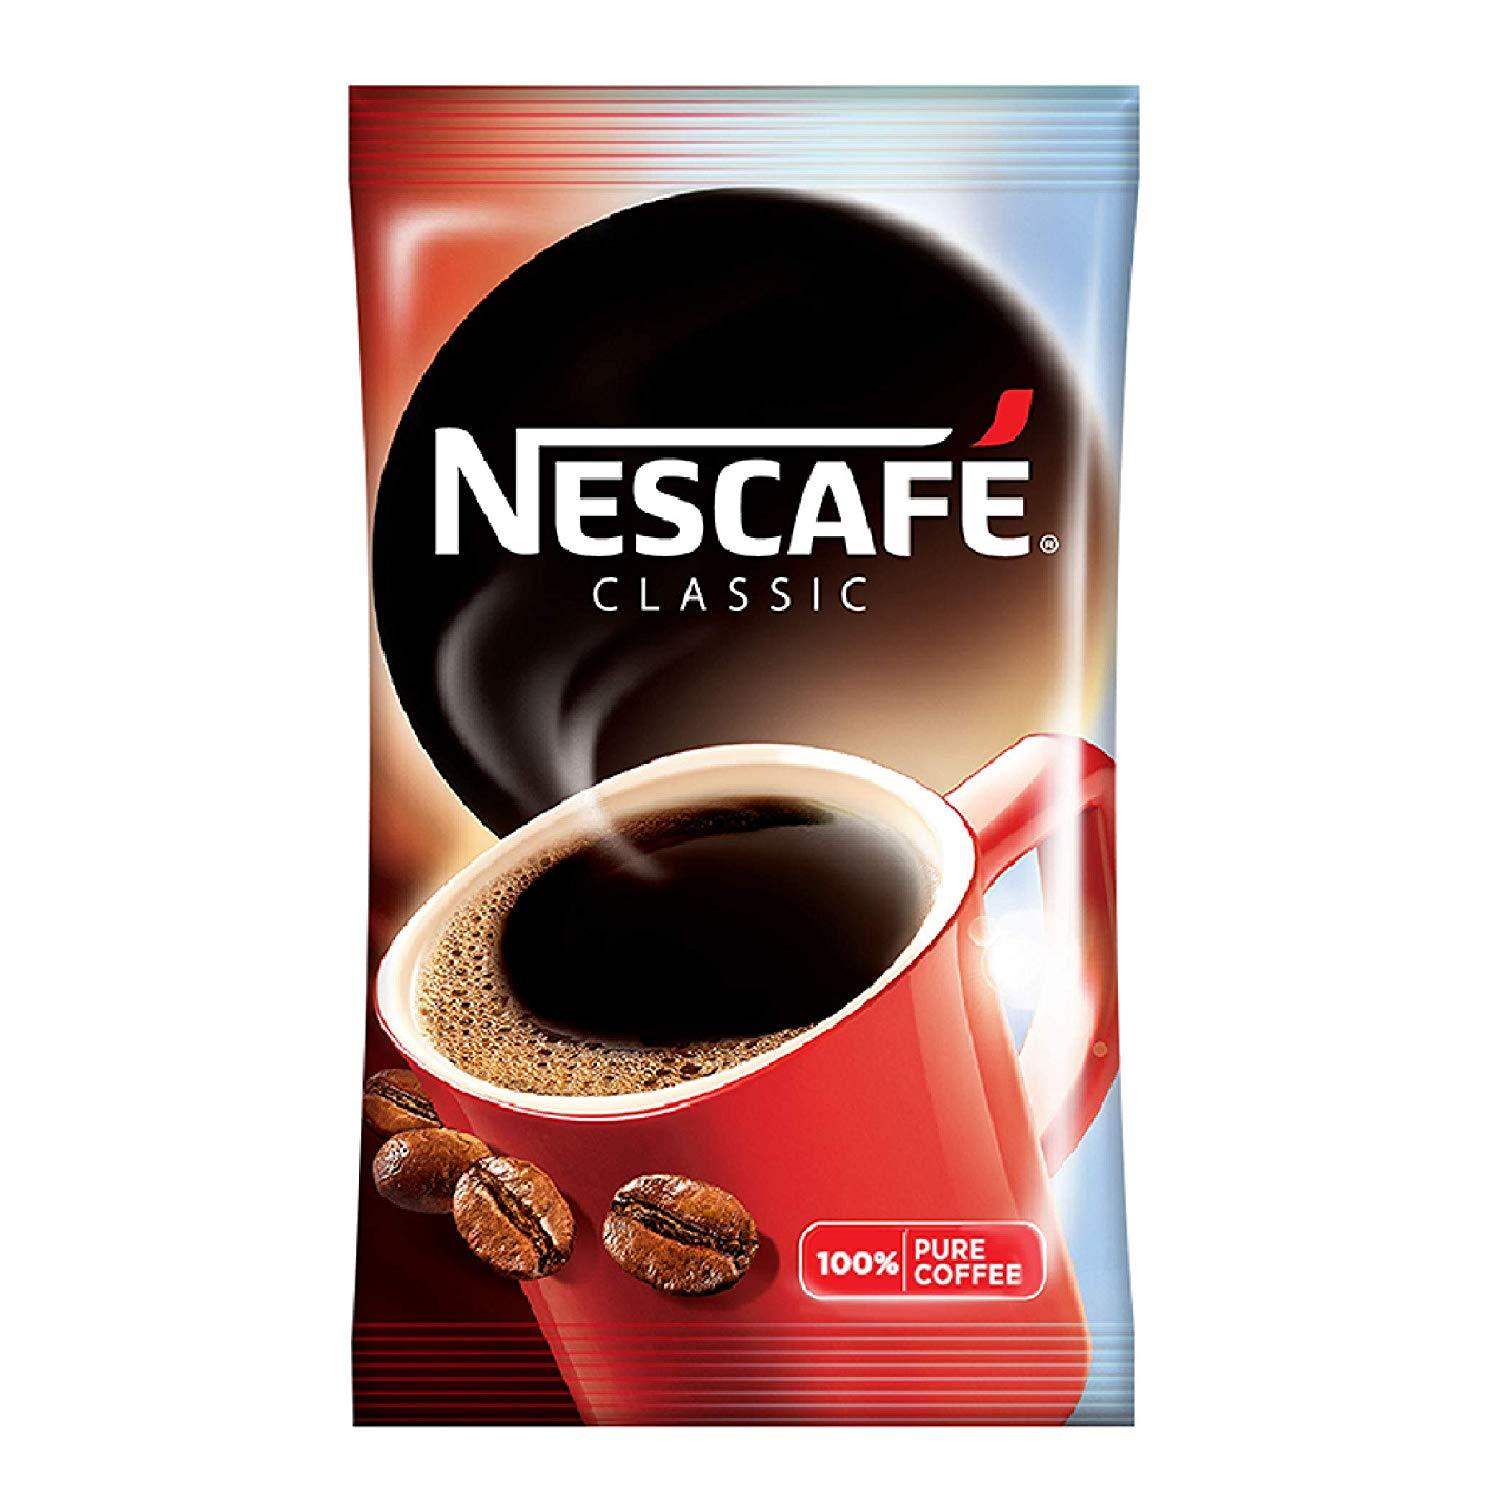 NESCAFE Classic Coffee- Sachet